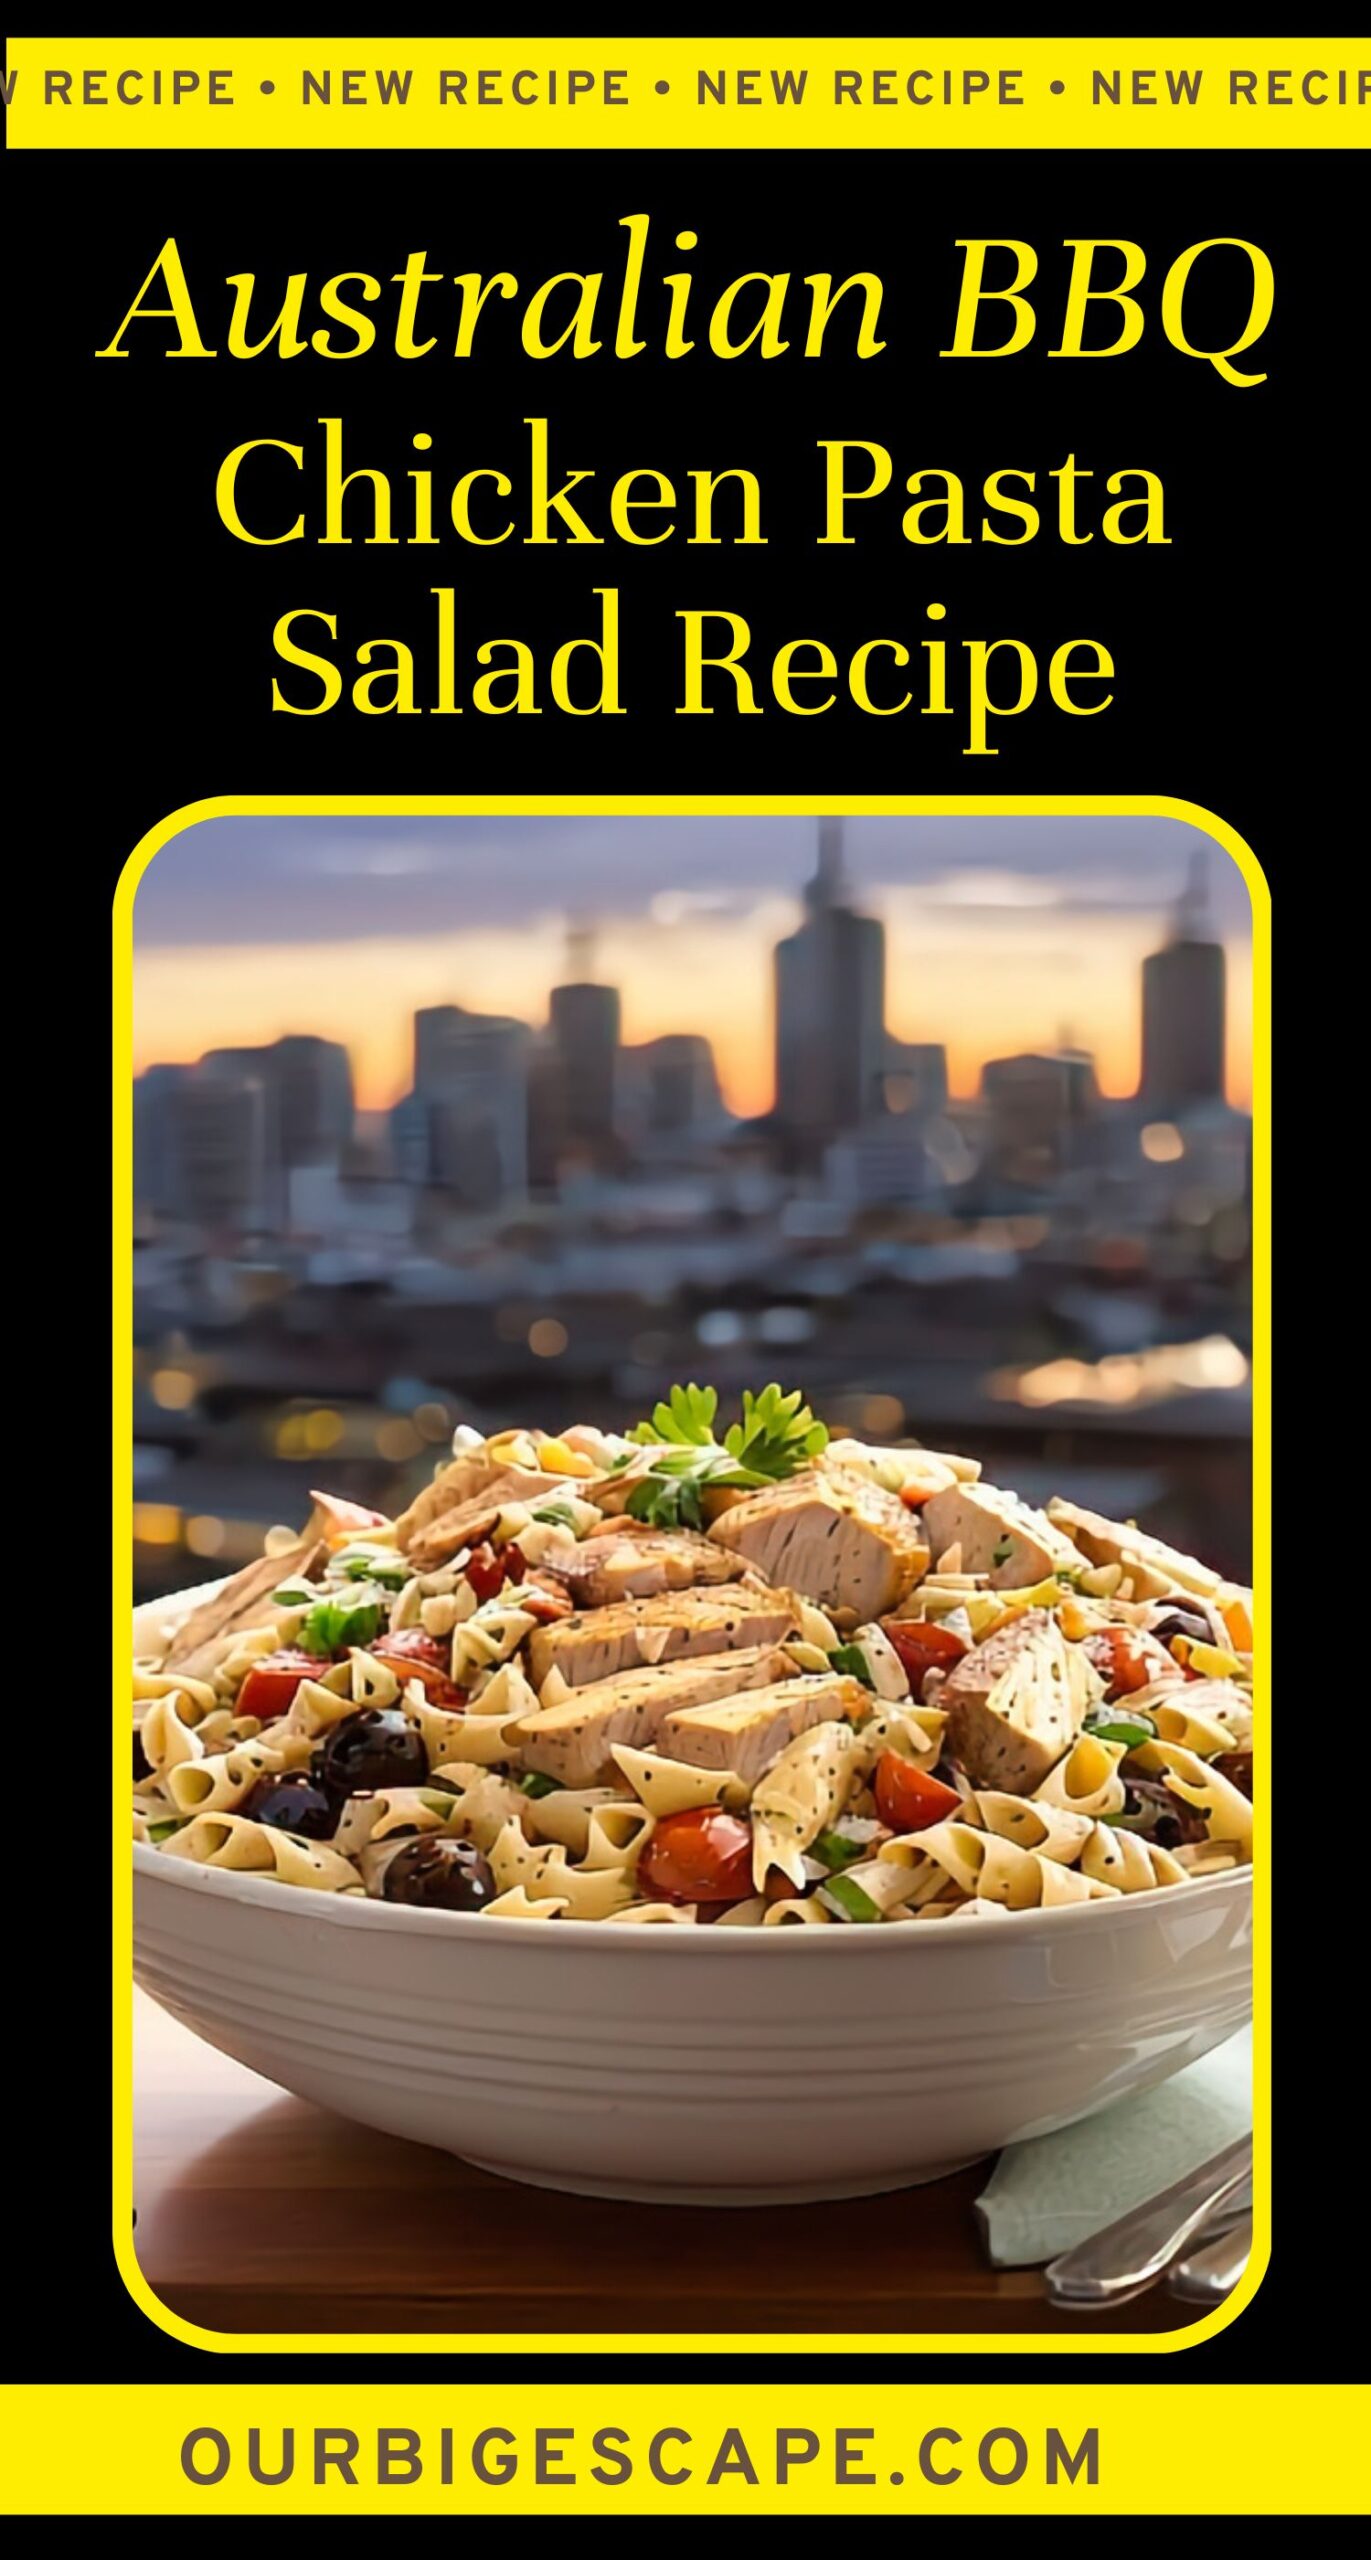 1. Australian Barbecued Chicken Pasta Salad Recipe